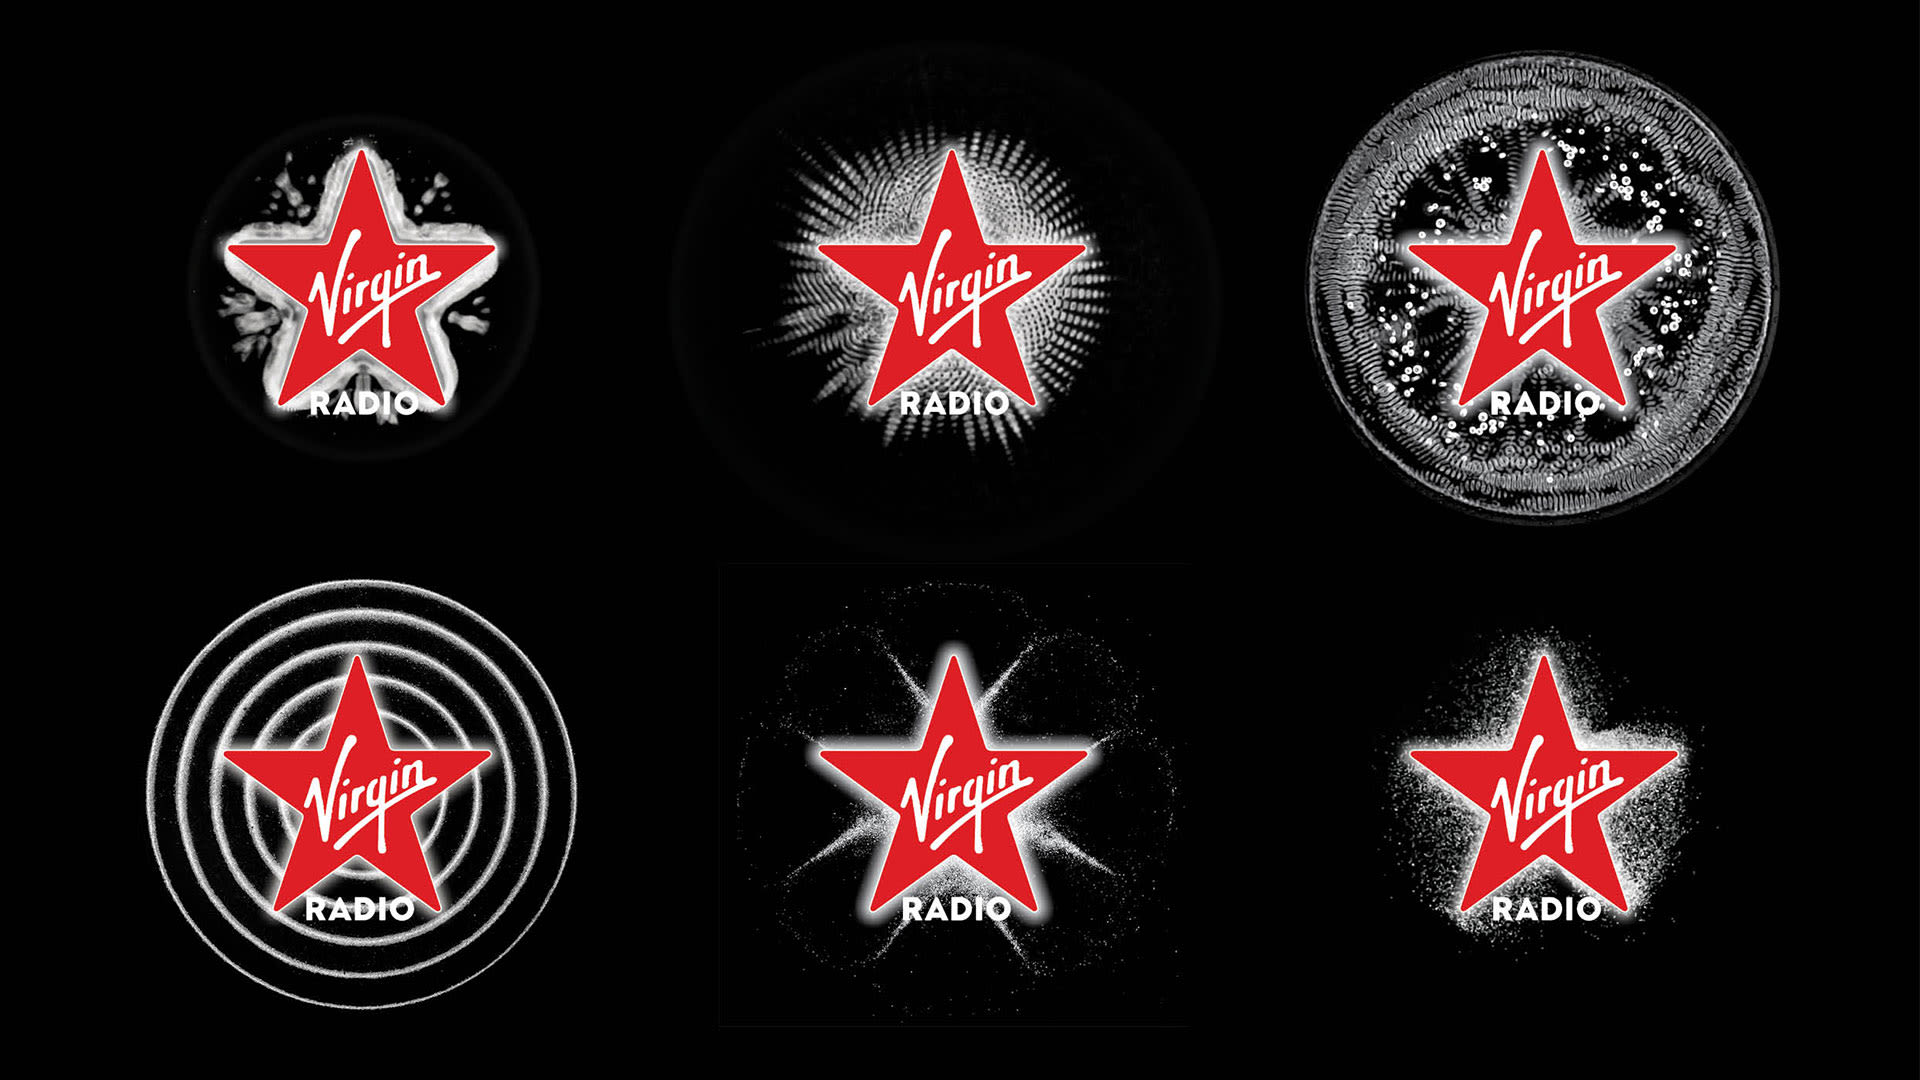 Virgin Radio visual identity using cymatics